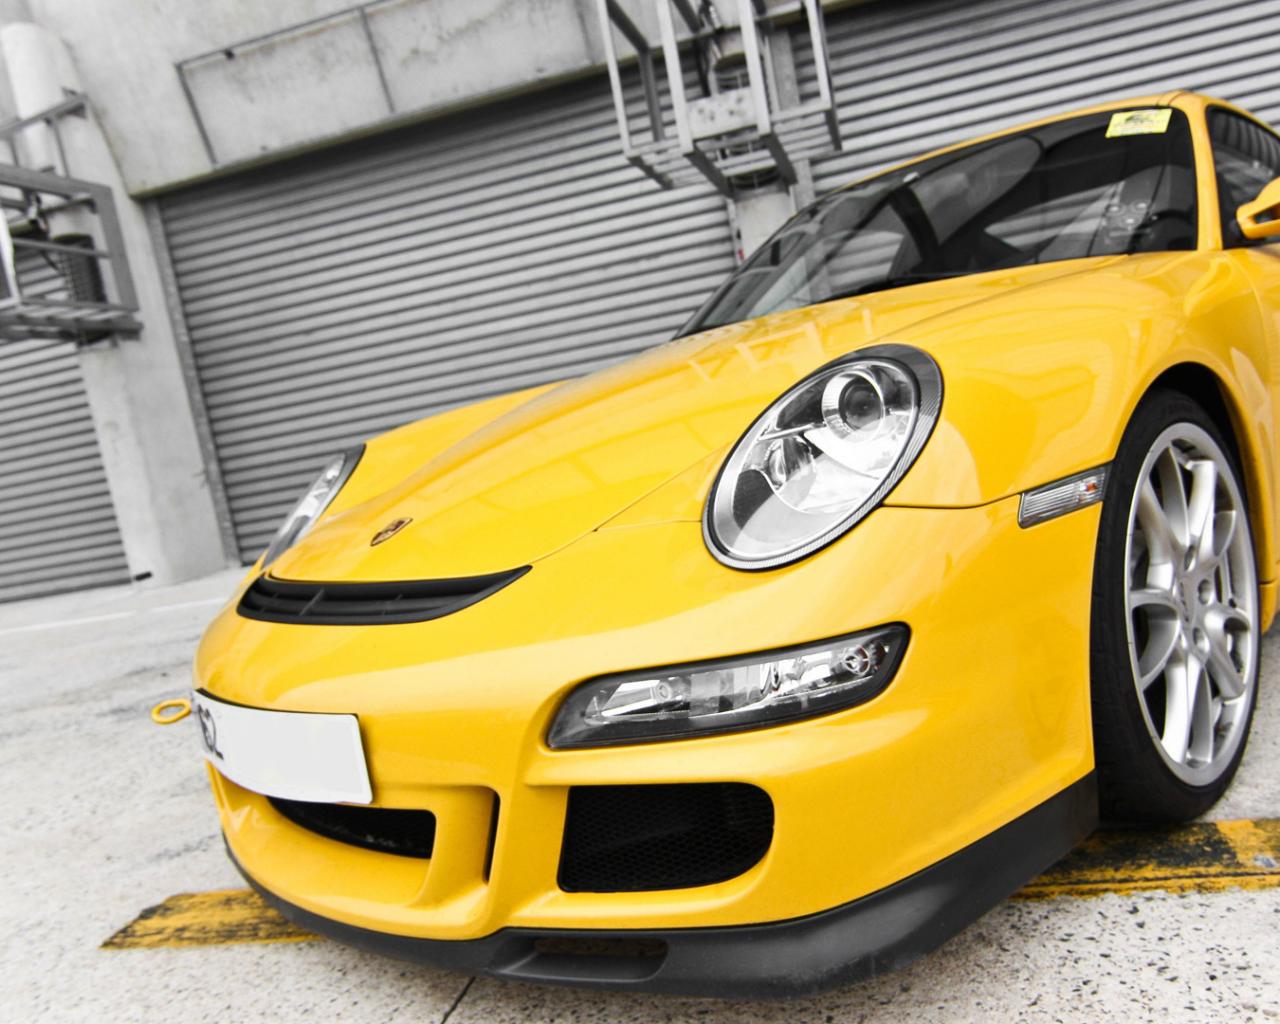 Porsche 997 gt3, supercar, порше, суперкар, желтый Автомобили картинки, обои рабочий стол